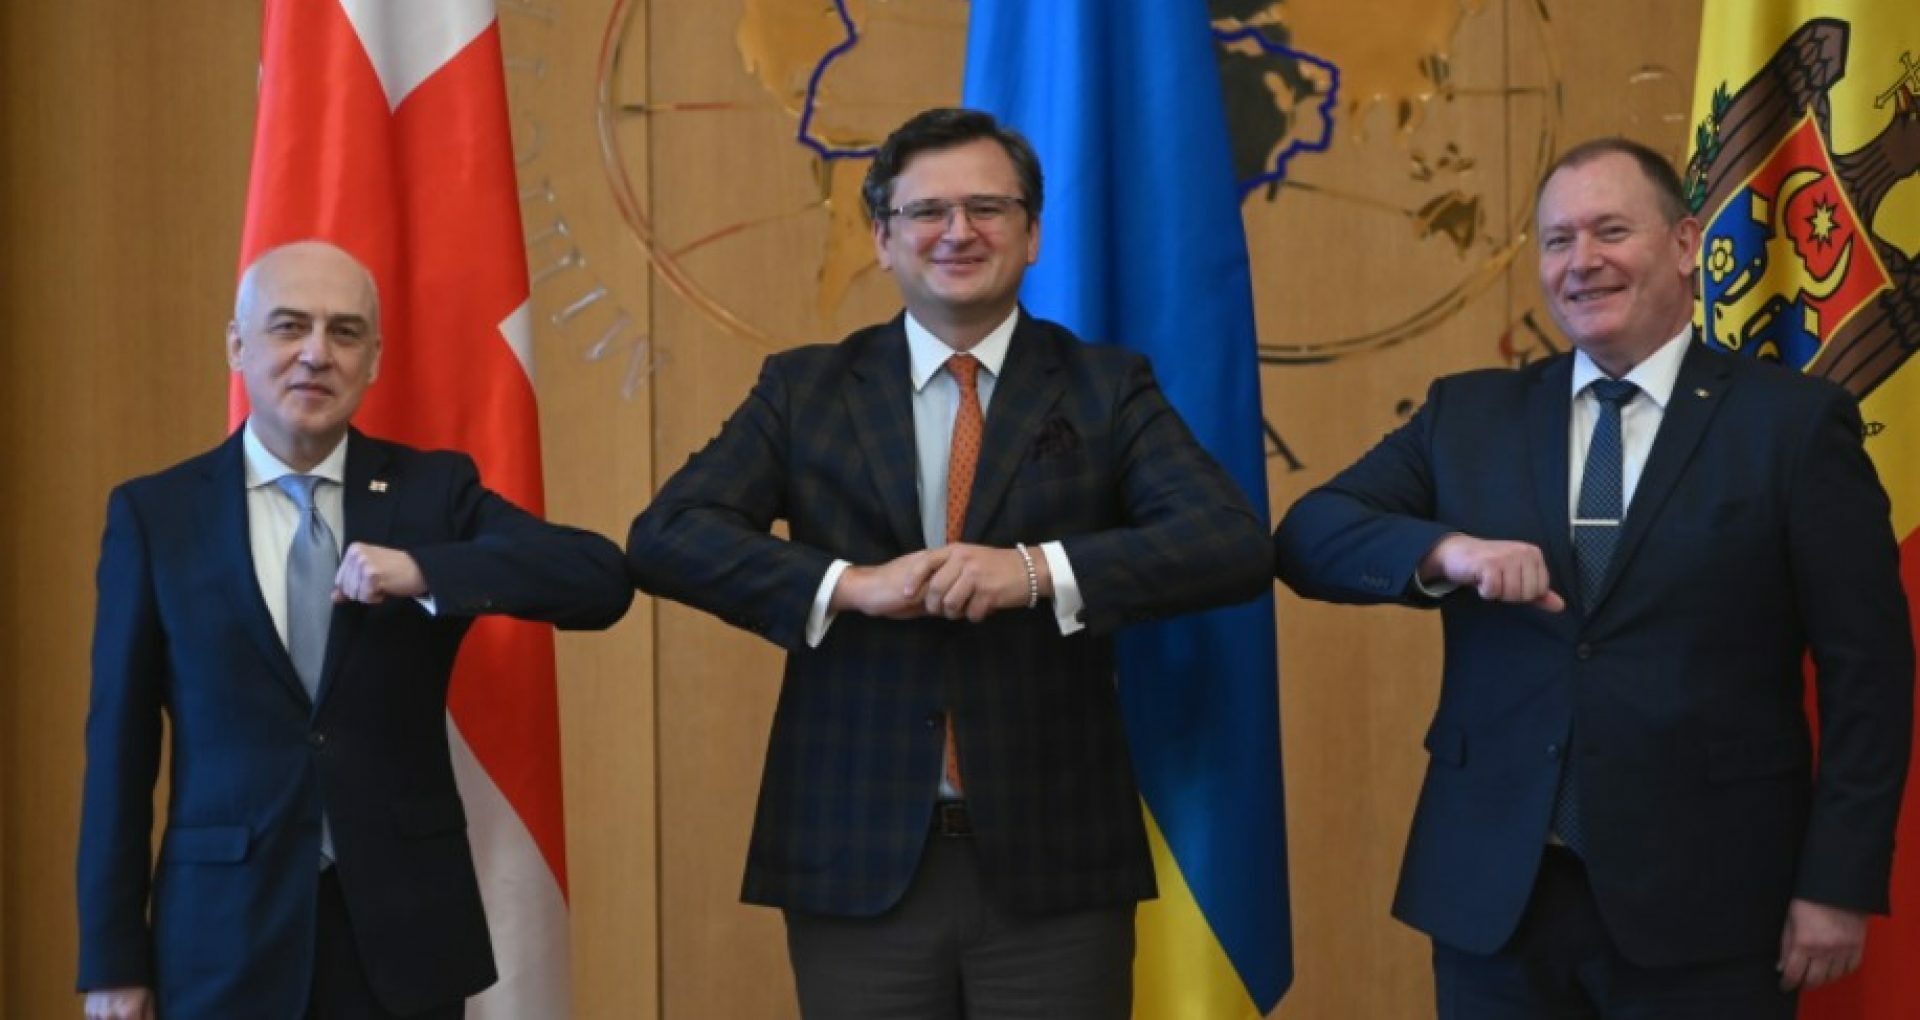 Moldova, Ukraine, and Georgia Signed a Memorandum for Cooperation on European Integration